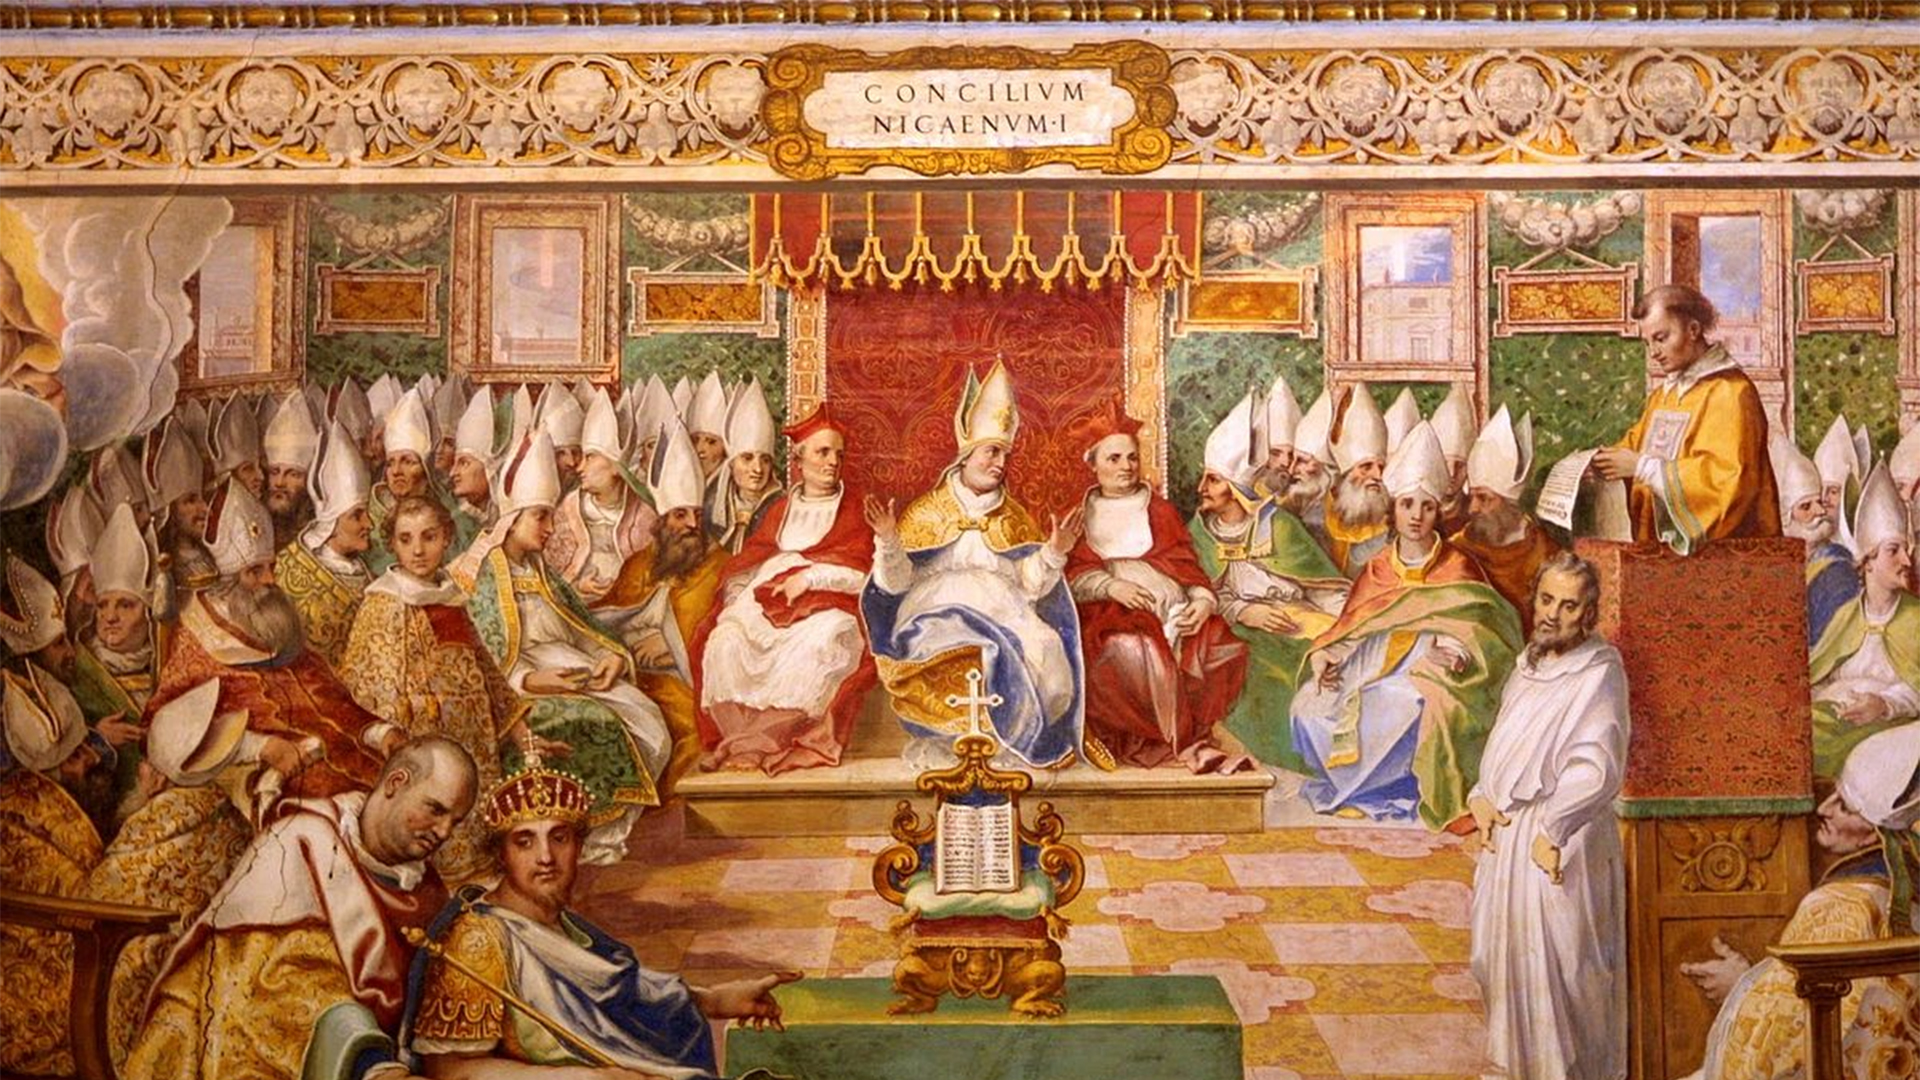 Council of Nicaea 325 Date	1590 Source	http://ariandjabarimchenry.com/first-council-of-nicaea/ Author	Fresco in Capella Sistina, Vatican